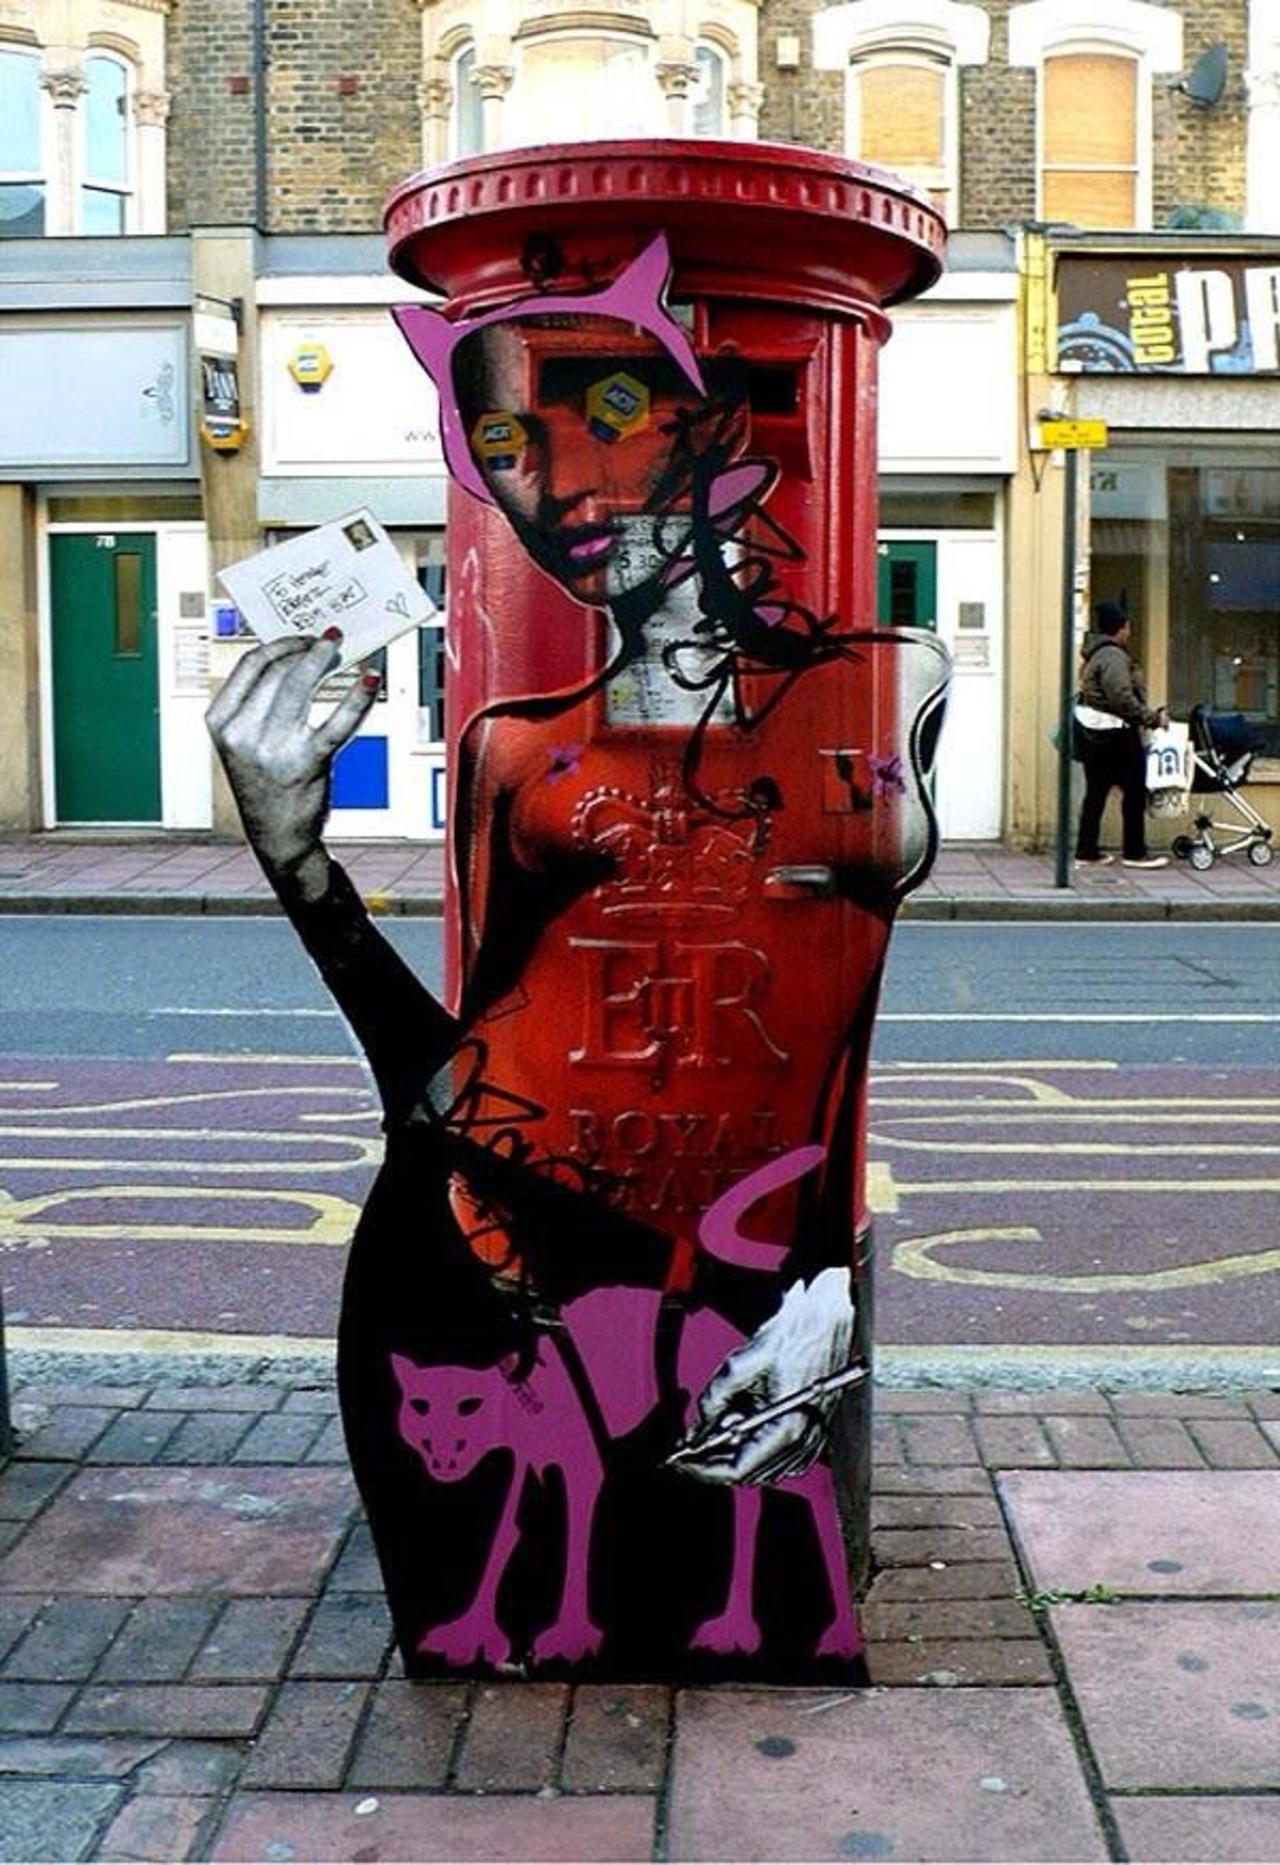 Artist Miss Bugs very clever Street Art piece in London, UK #art #graffiti #streetart http://t.co/dxJO6mbPnd